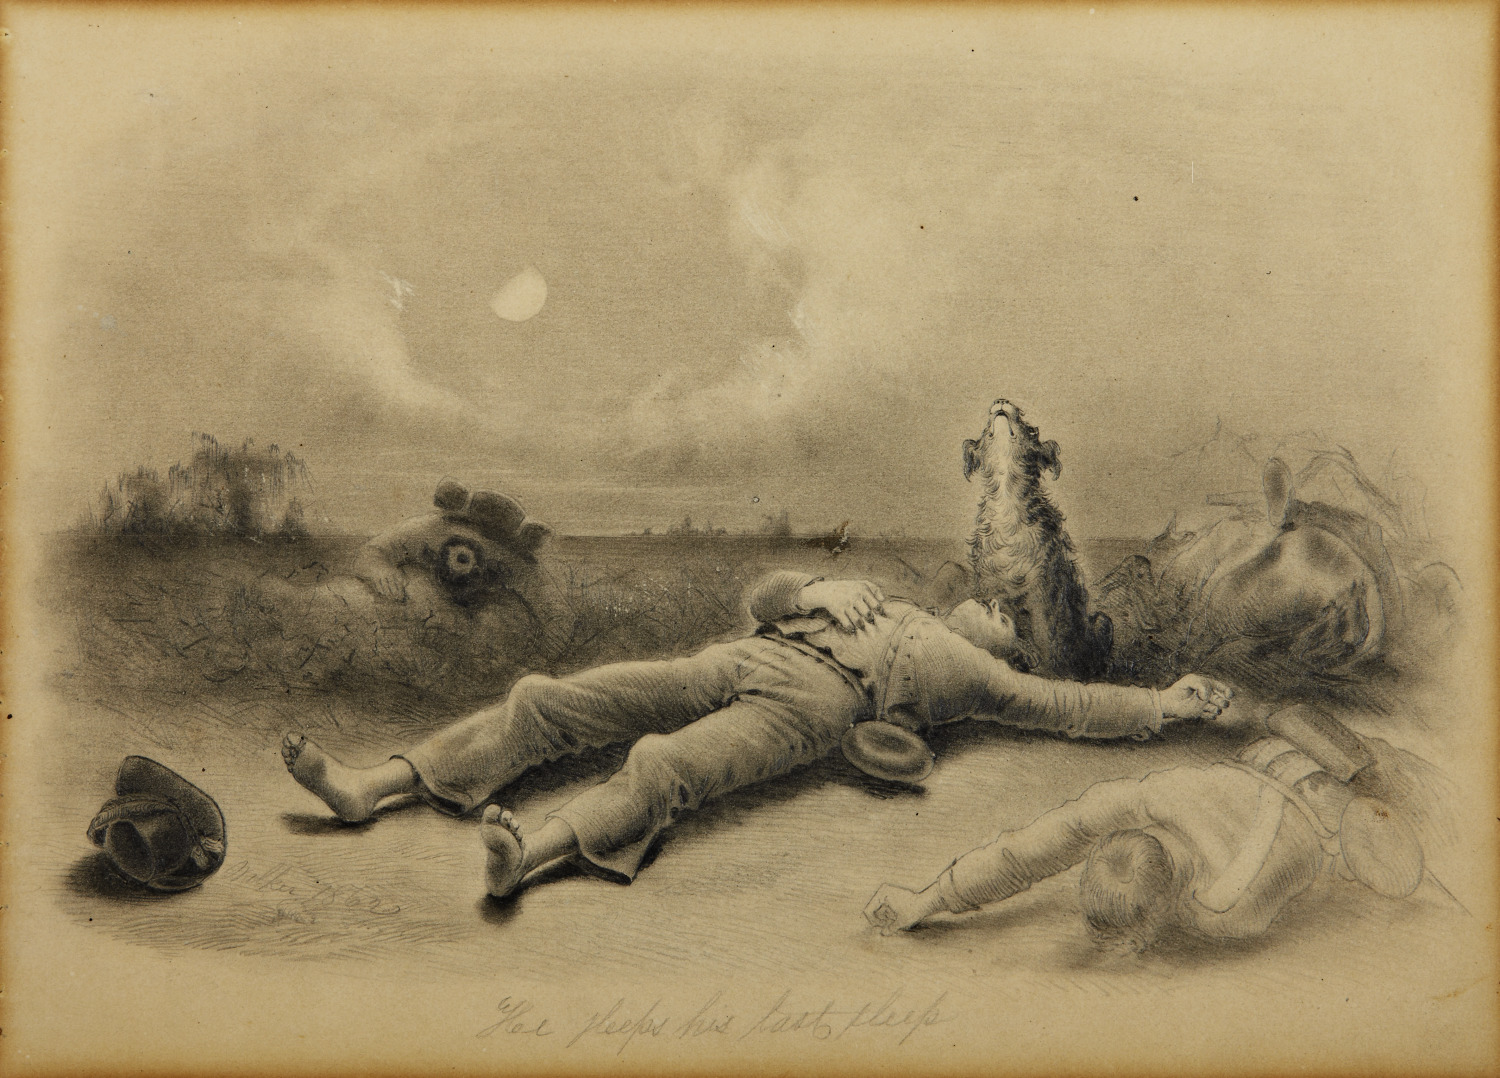 James Walker, He Sleeps His Last Sleep (Duerme su último sueño), 1862. Pencil. Gift of the Carl S. Dentzel Family Collection.